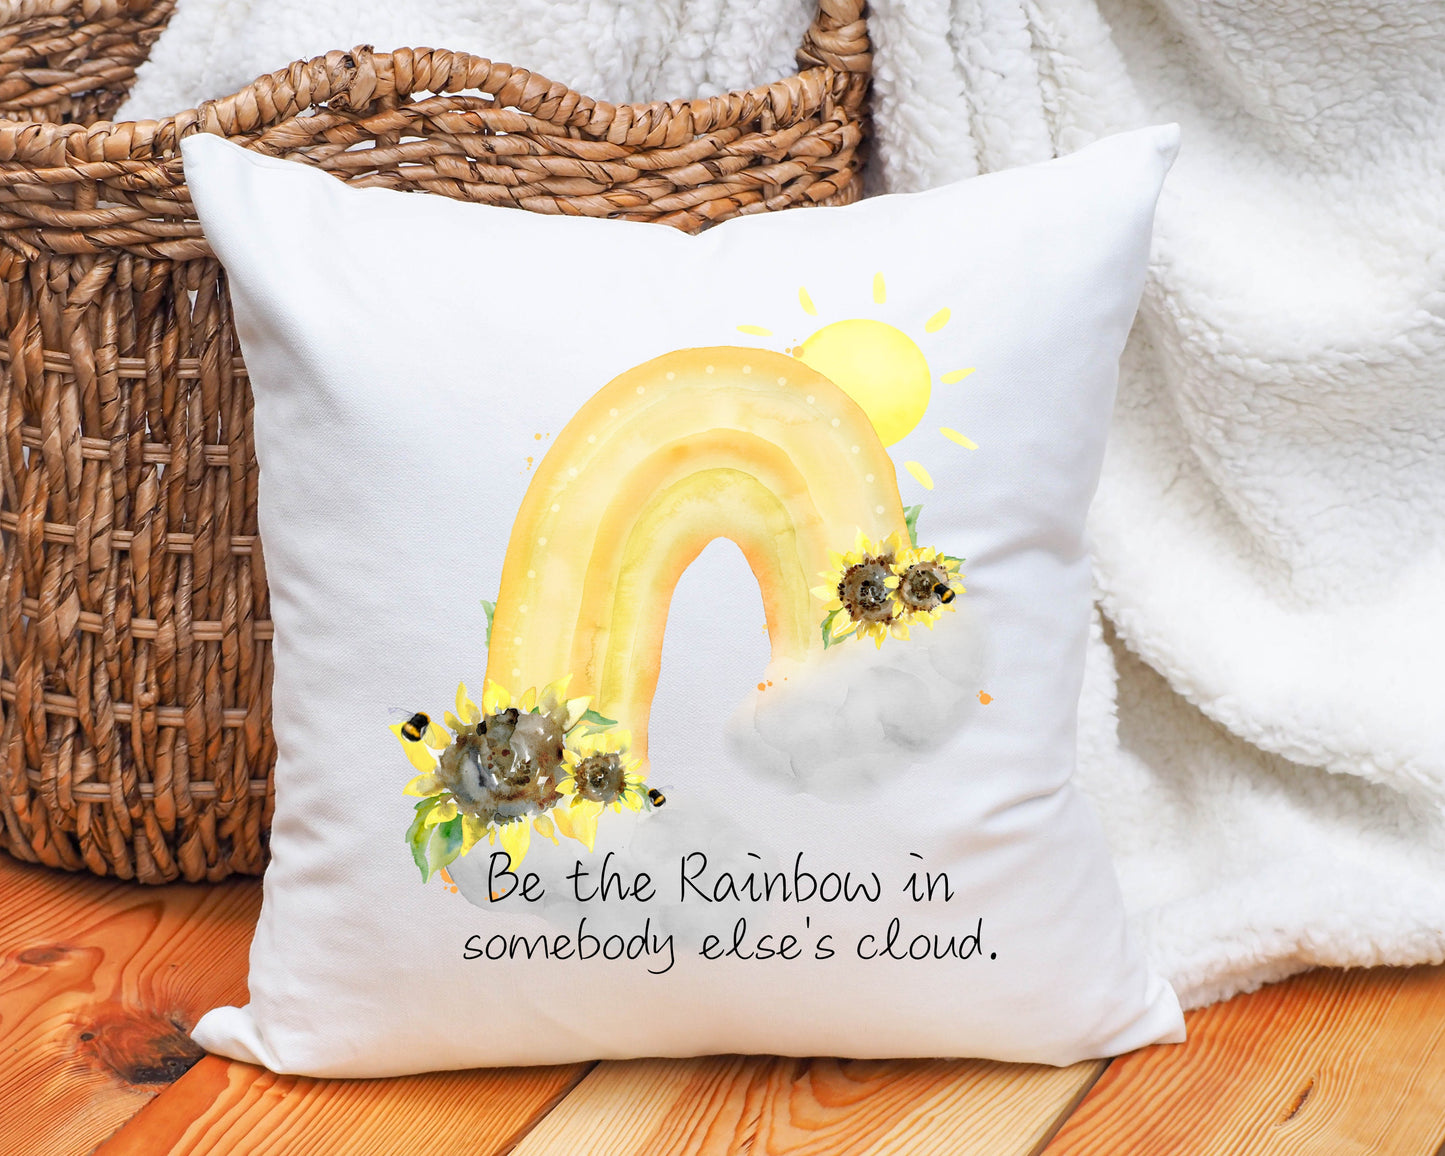 Positivity Gift, Pick Me Up Gift, Gift For Her, Friend Gift, Gift For Mum,  Birthday Gift, Bee Rainbow Sunflower Design